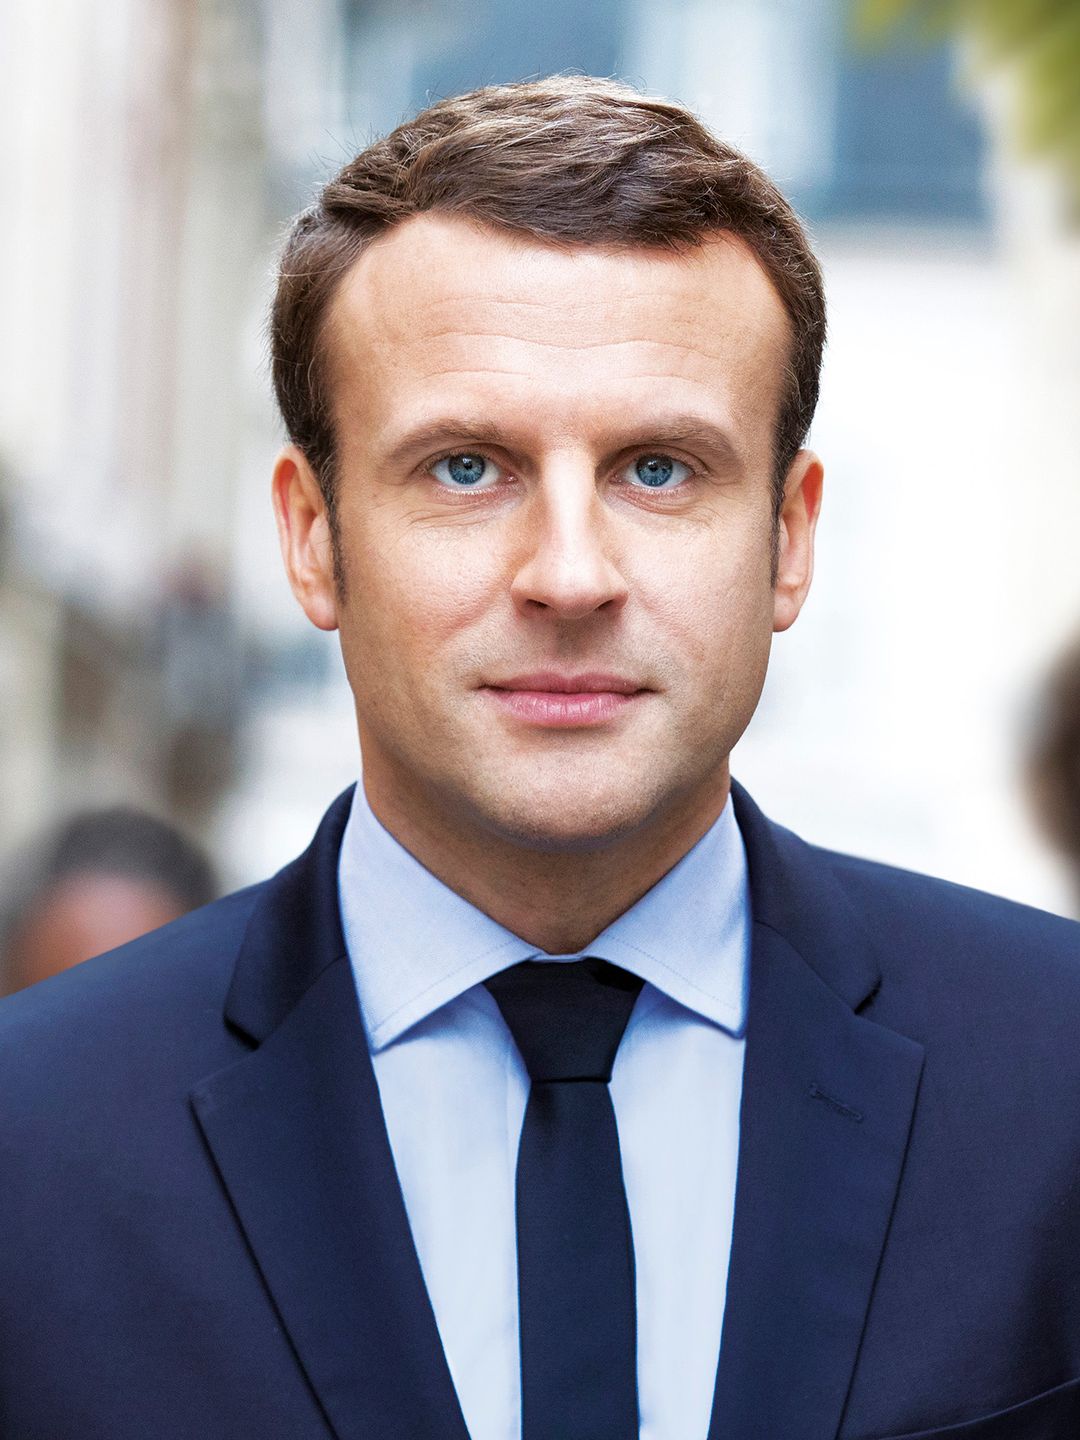 Emmanuel Macron city of birth